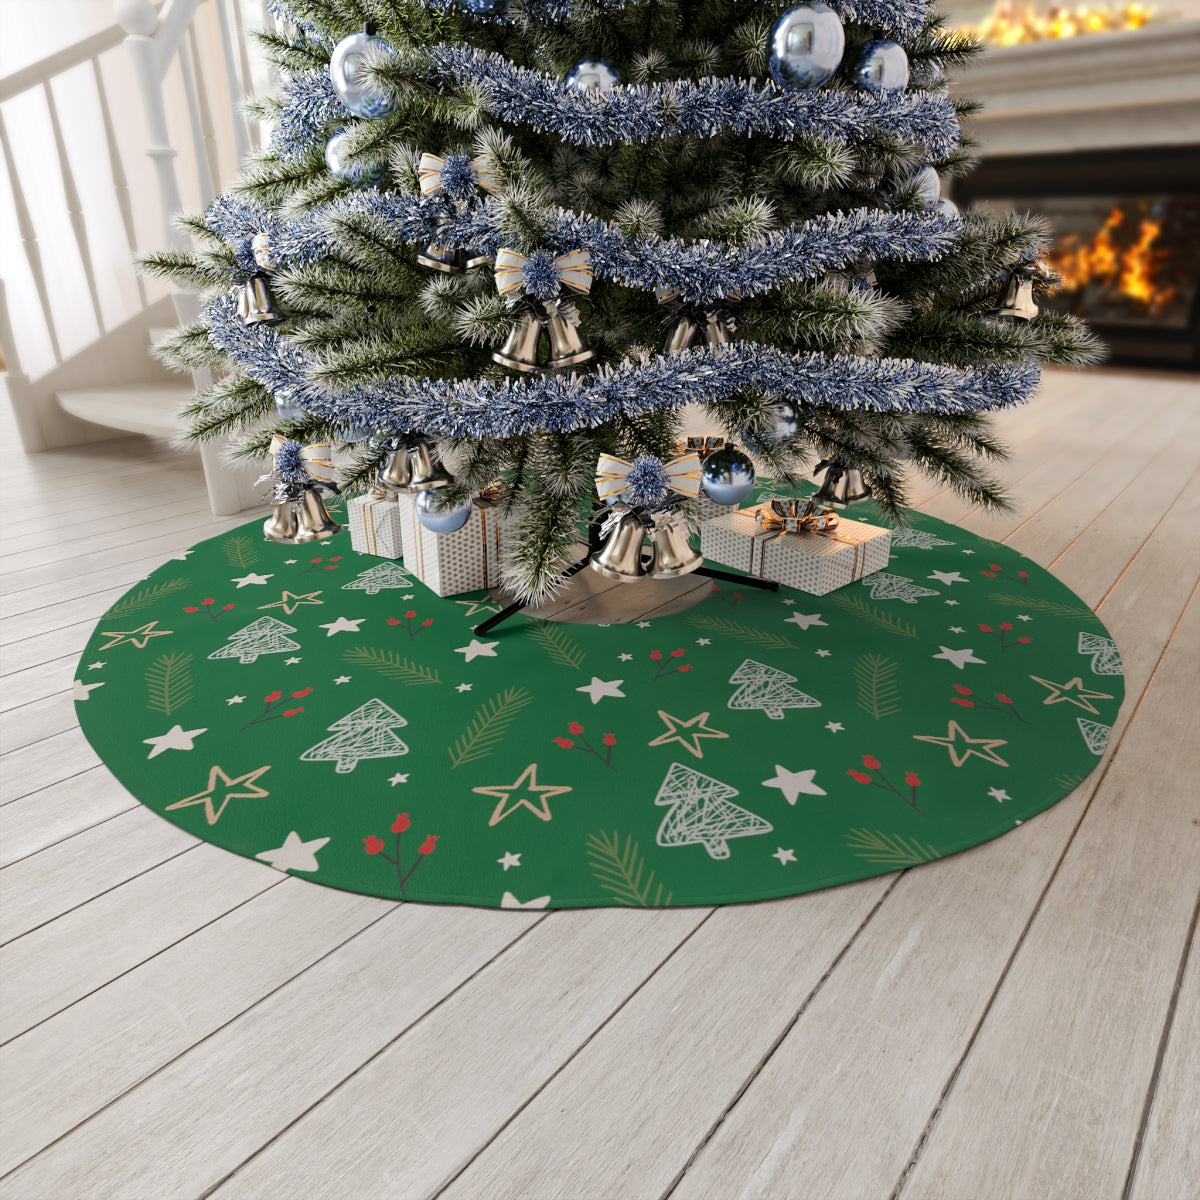 Green Stars Trees and Pine Needles ~ Christmas Holiday Round Tree Skirt